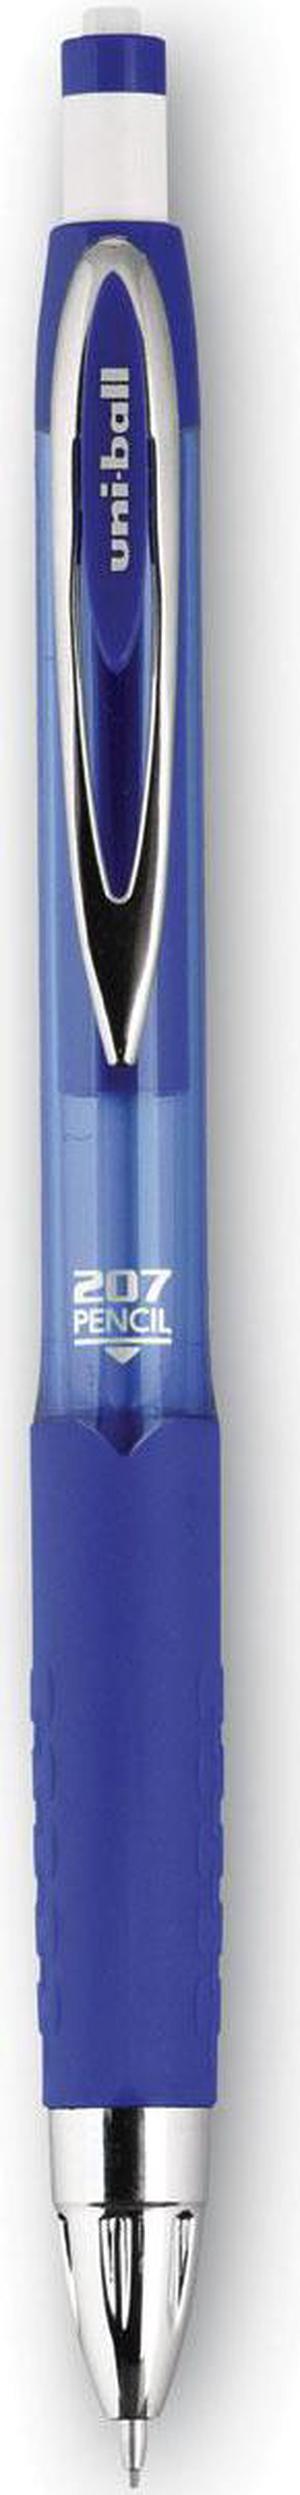 Uni-ball 207 Mechanical Pencil, 0.7 mm, HB (#2), Black Lead, Blue Barrel, Dozen